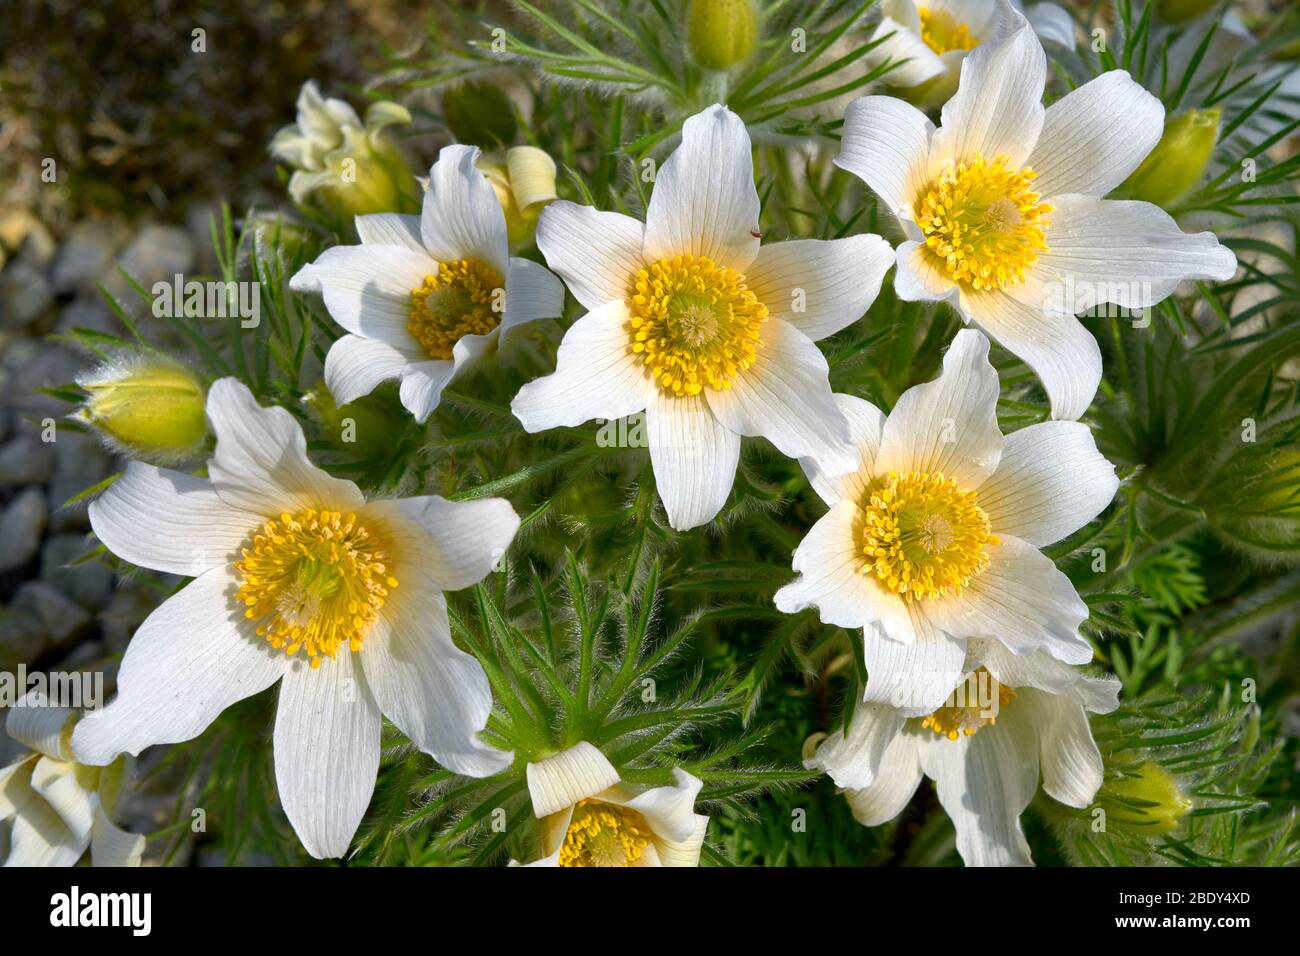 WHITE FLOWERS OF THE PULSATILLA PLANT Pulsatilla vulgaris PASQUEFLOWER THE FAMILY  Ranunculaceae Stock Photo